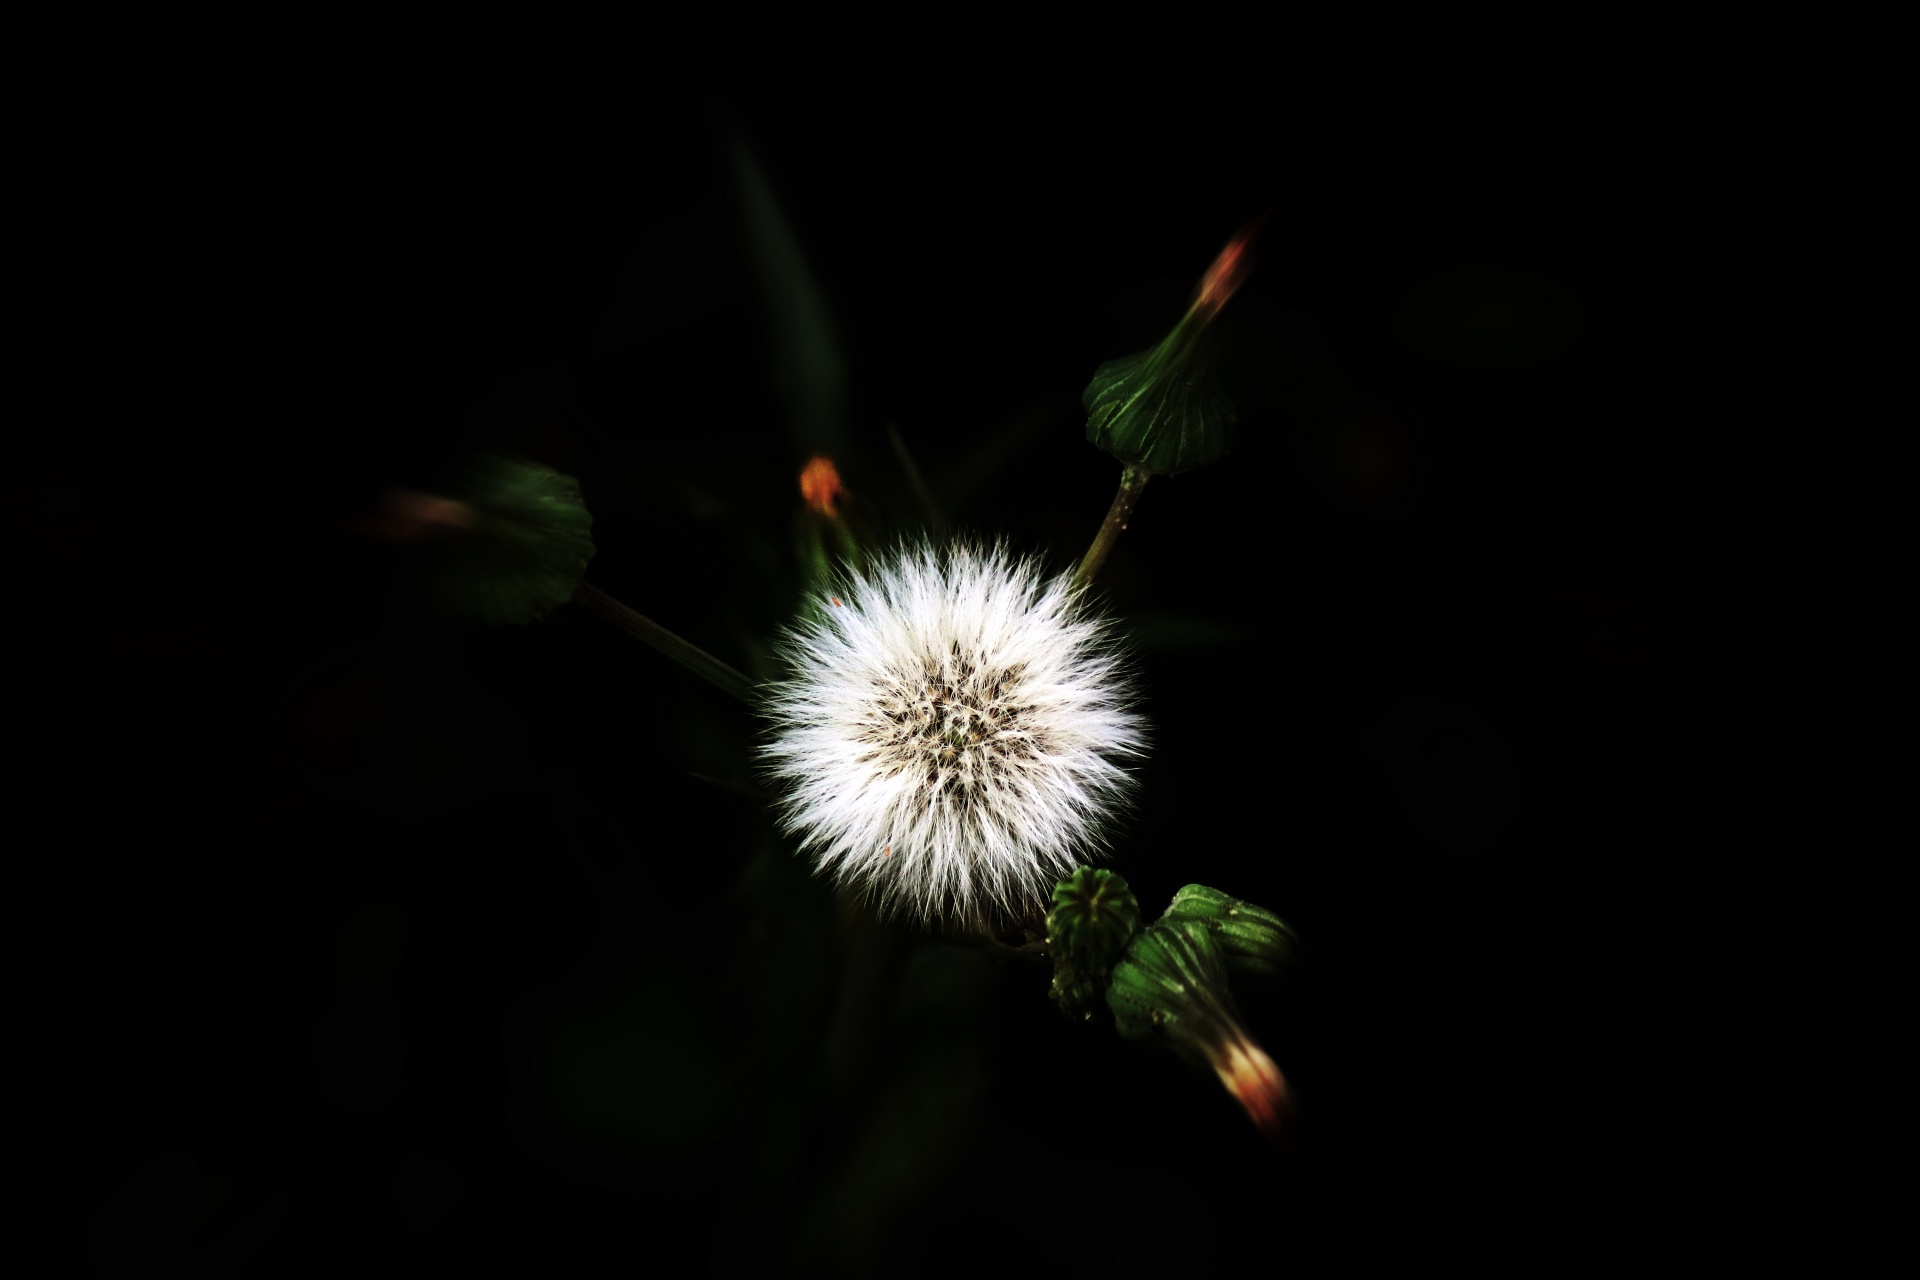 Zoom Burst Effect On Dandelion Seed